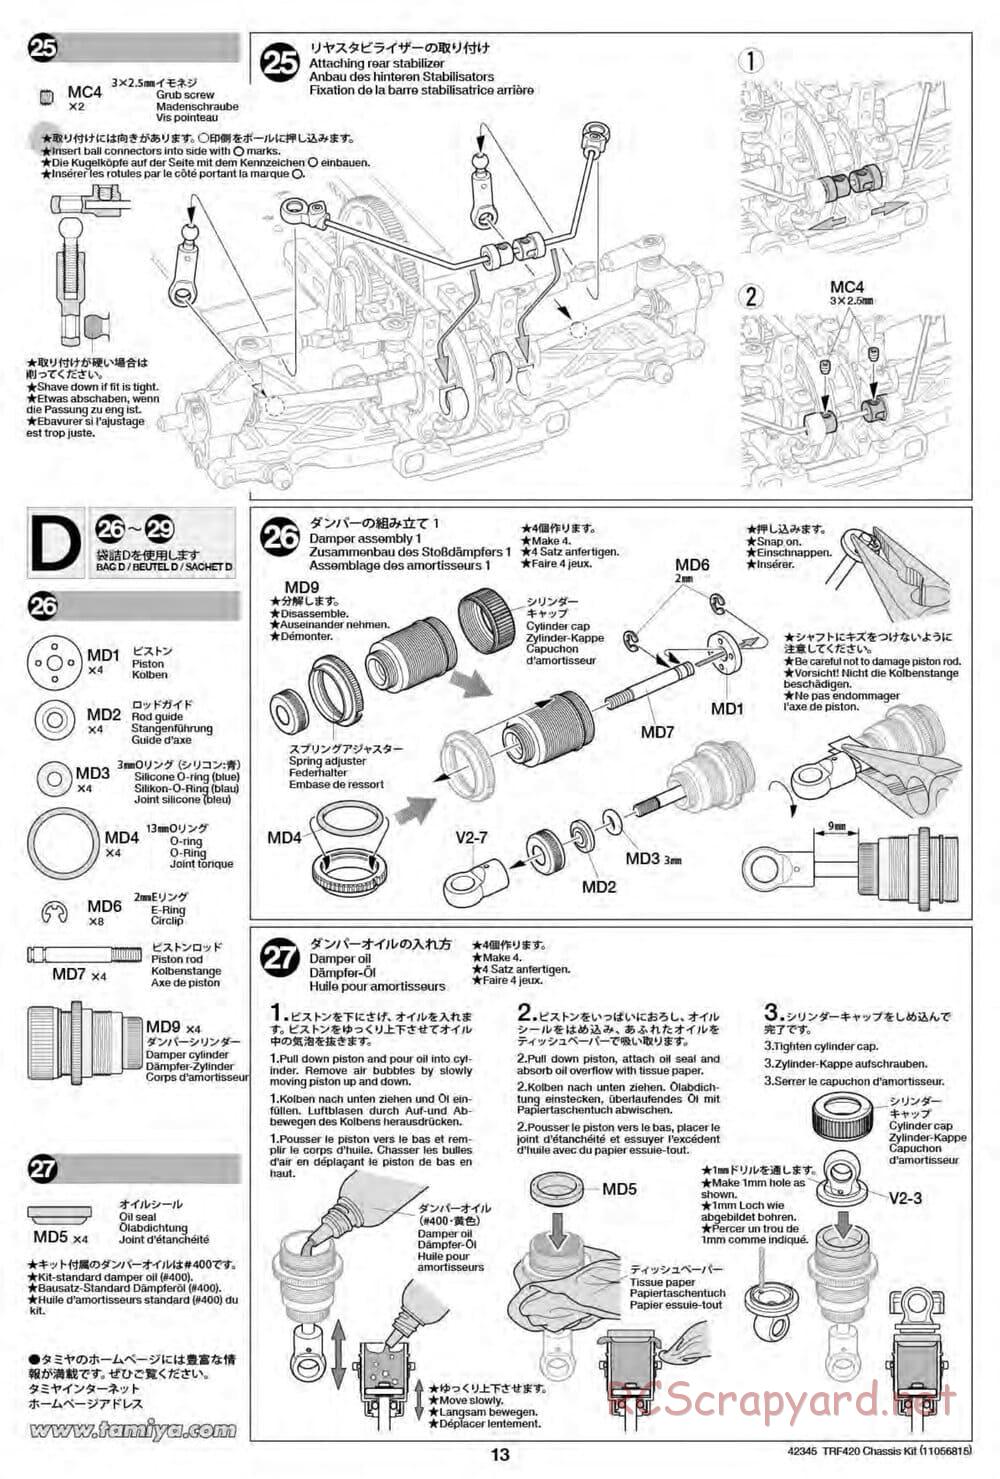 Tamiya - TRF420 Chassis - Manual - Page 13